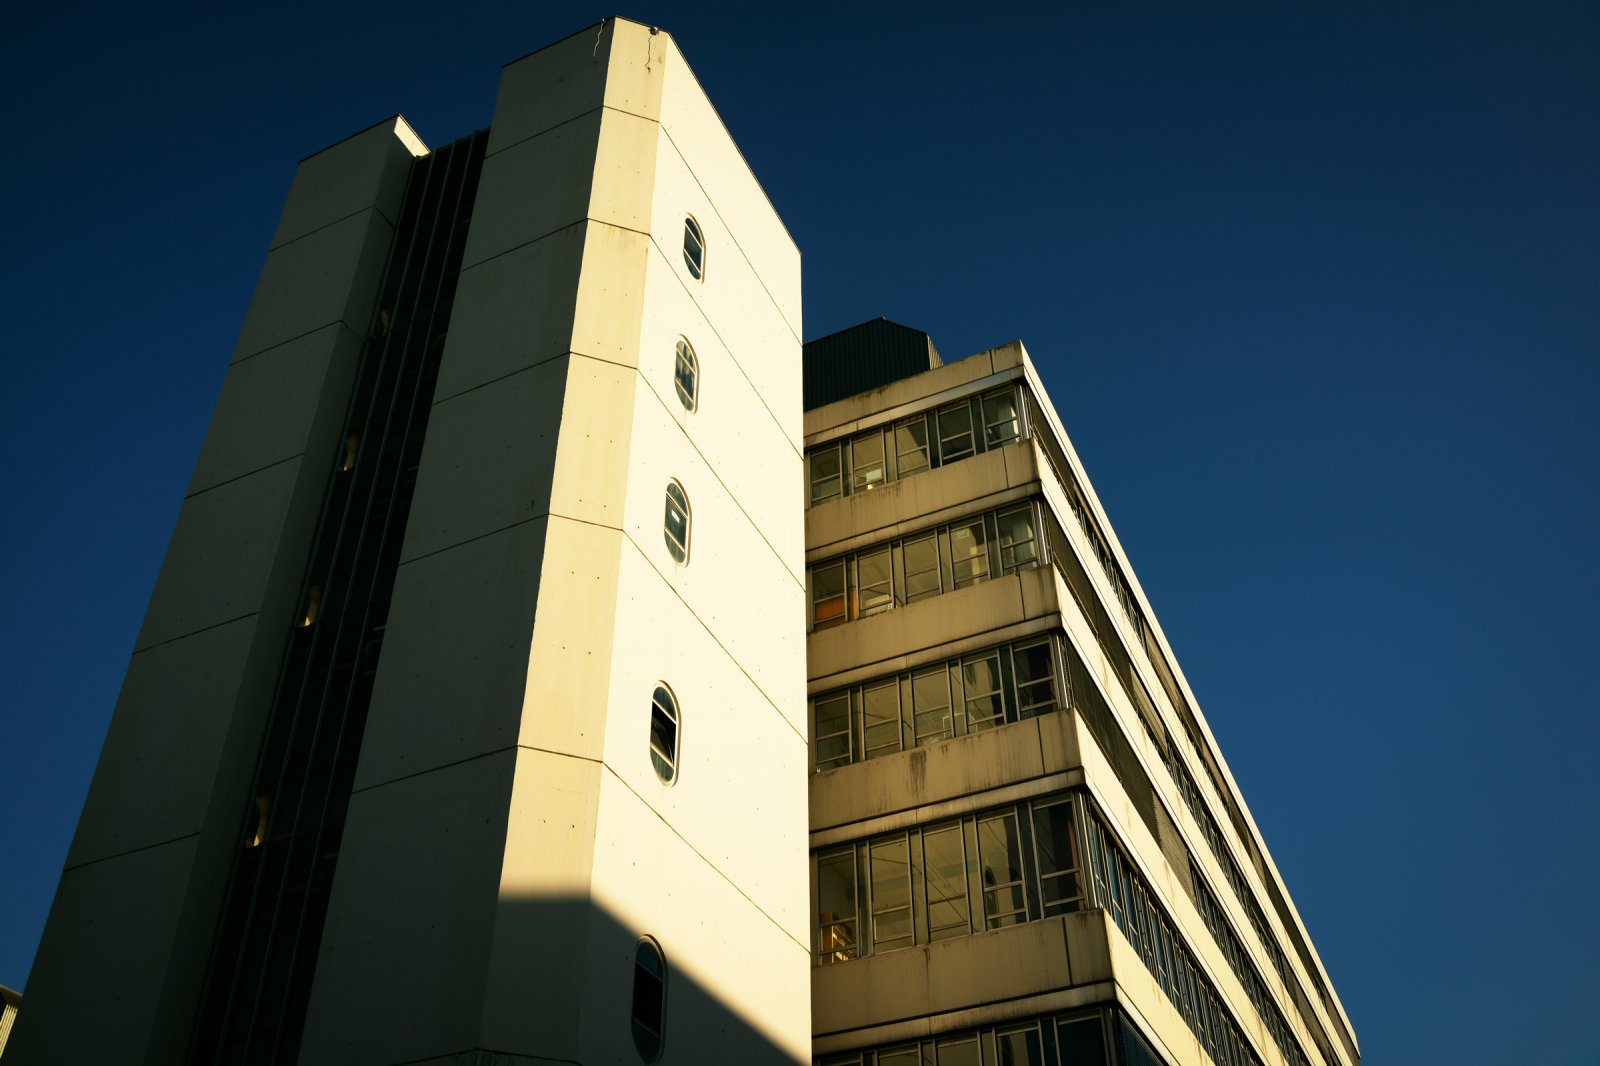 Bildefelder Universitätsgebäude vor blauem Himmel